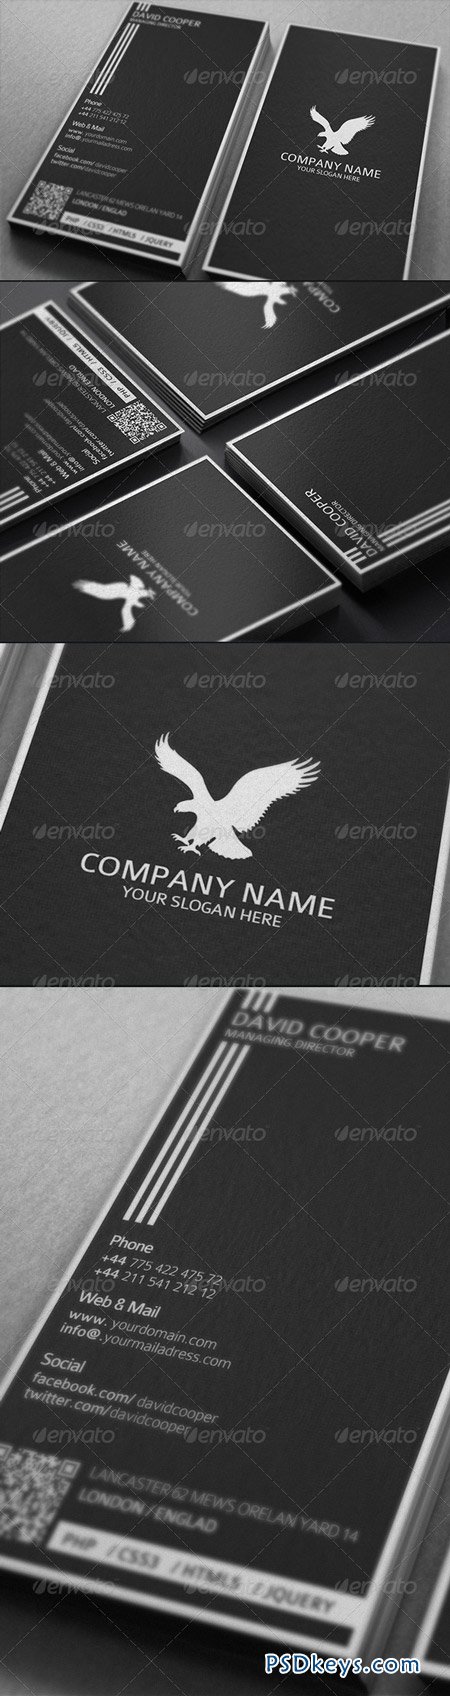 Creative Business Card 2644251